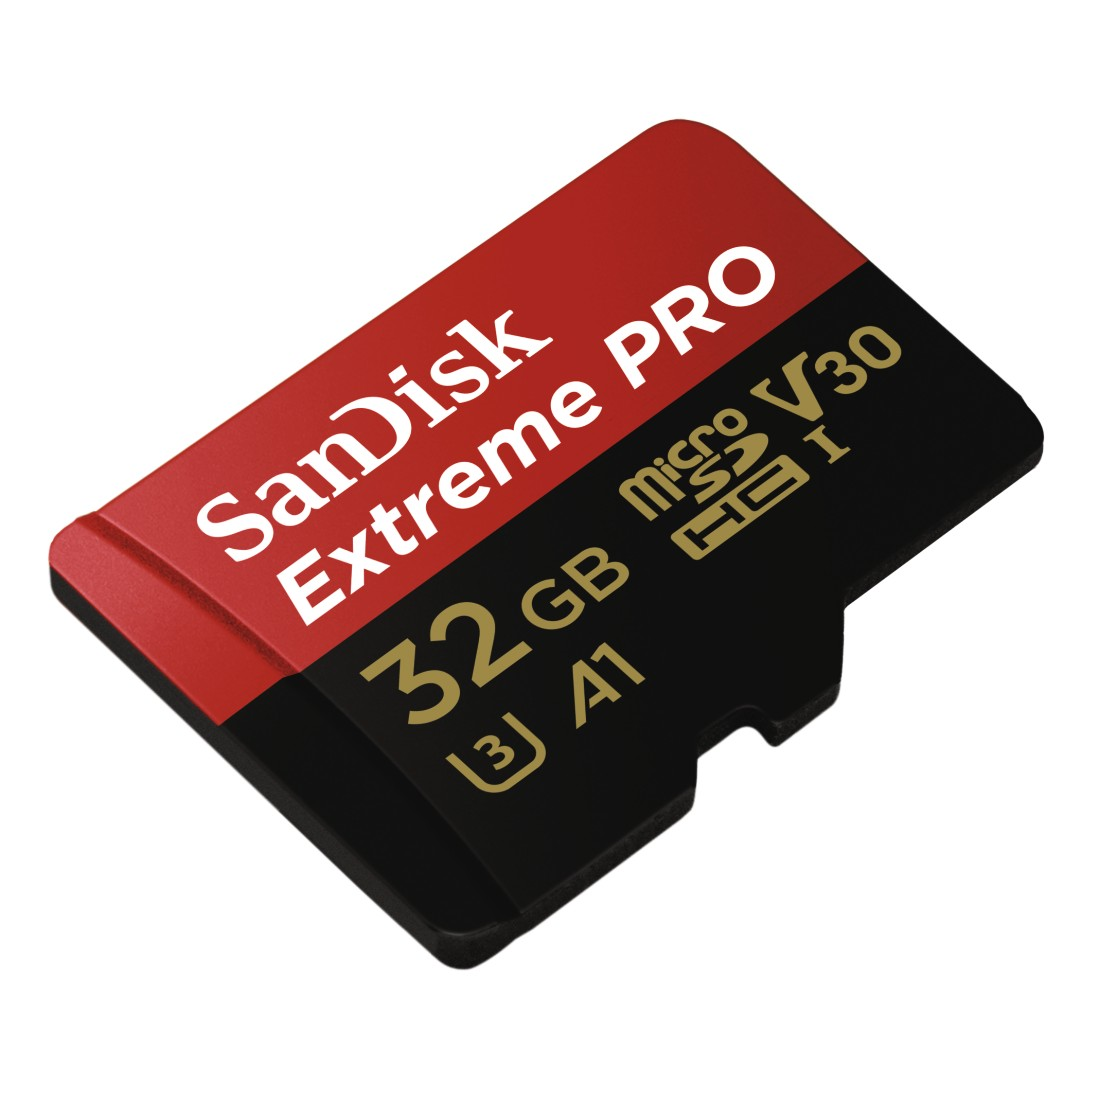 Speicherkarte, 100 SANDISK 32 Pro, Micro-SDHC MB/s GB, Extreme